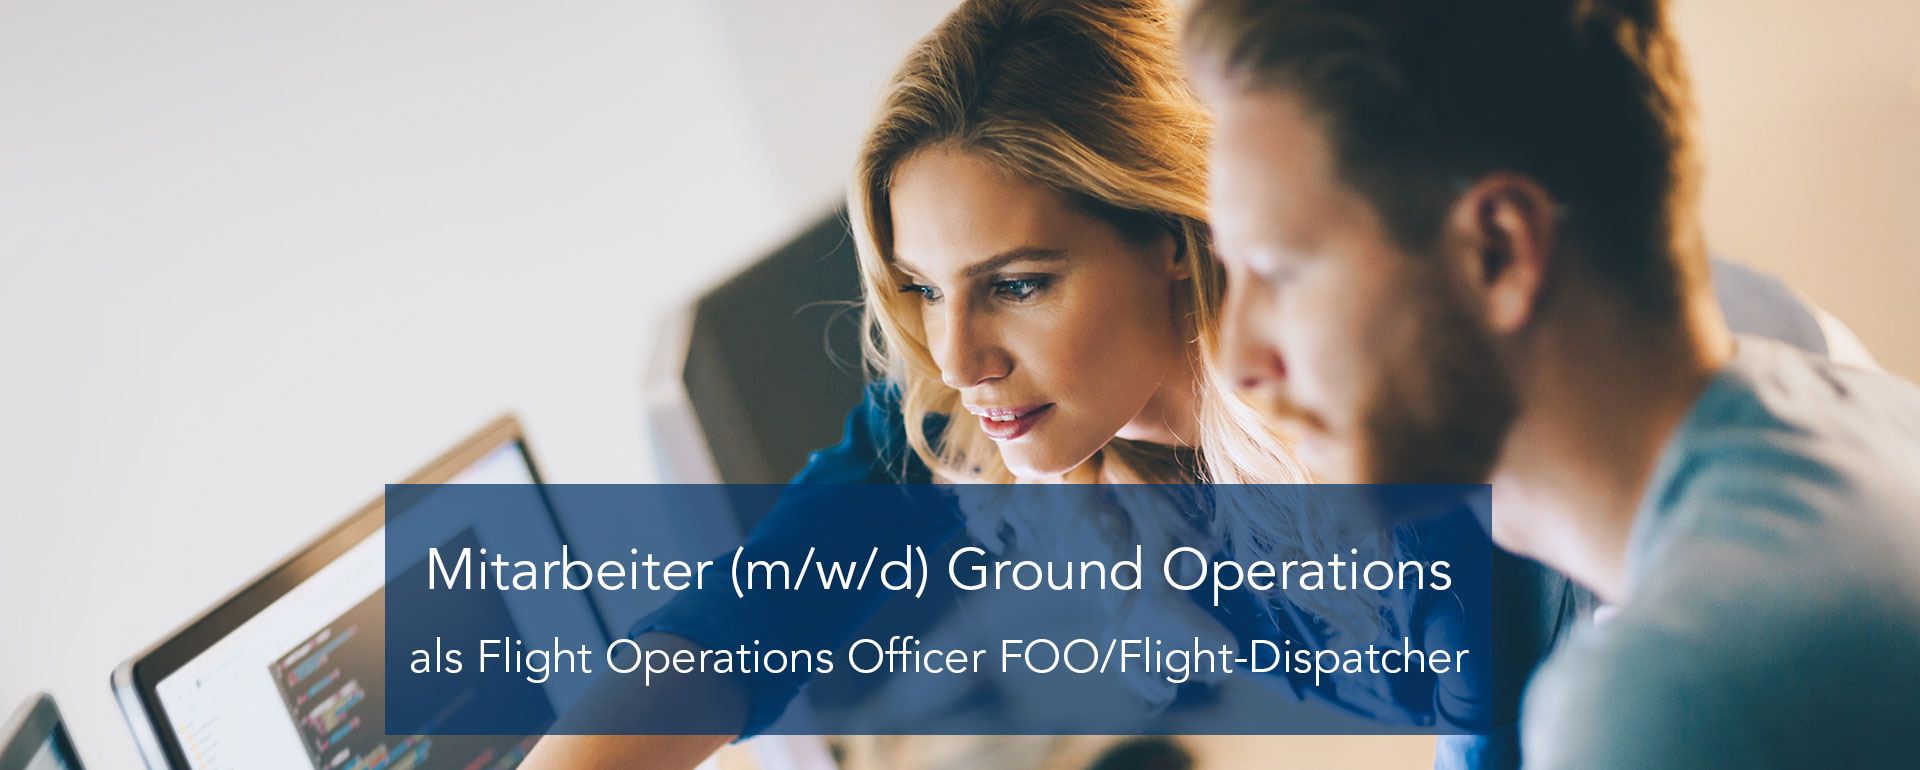 Mitarbeiter (m/w/d) Ground Operations als Flight Operations Officer FOO/Flight Dispatcher